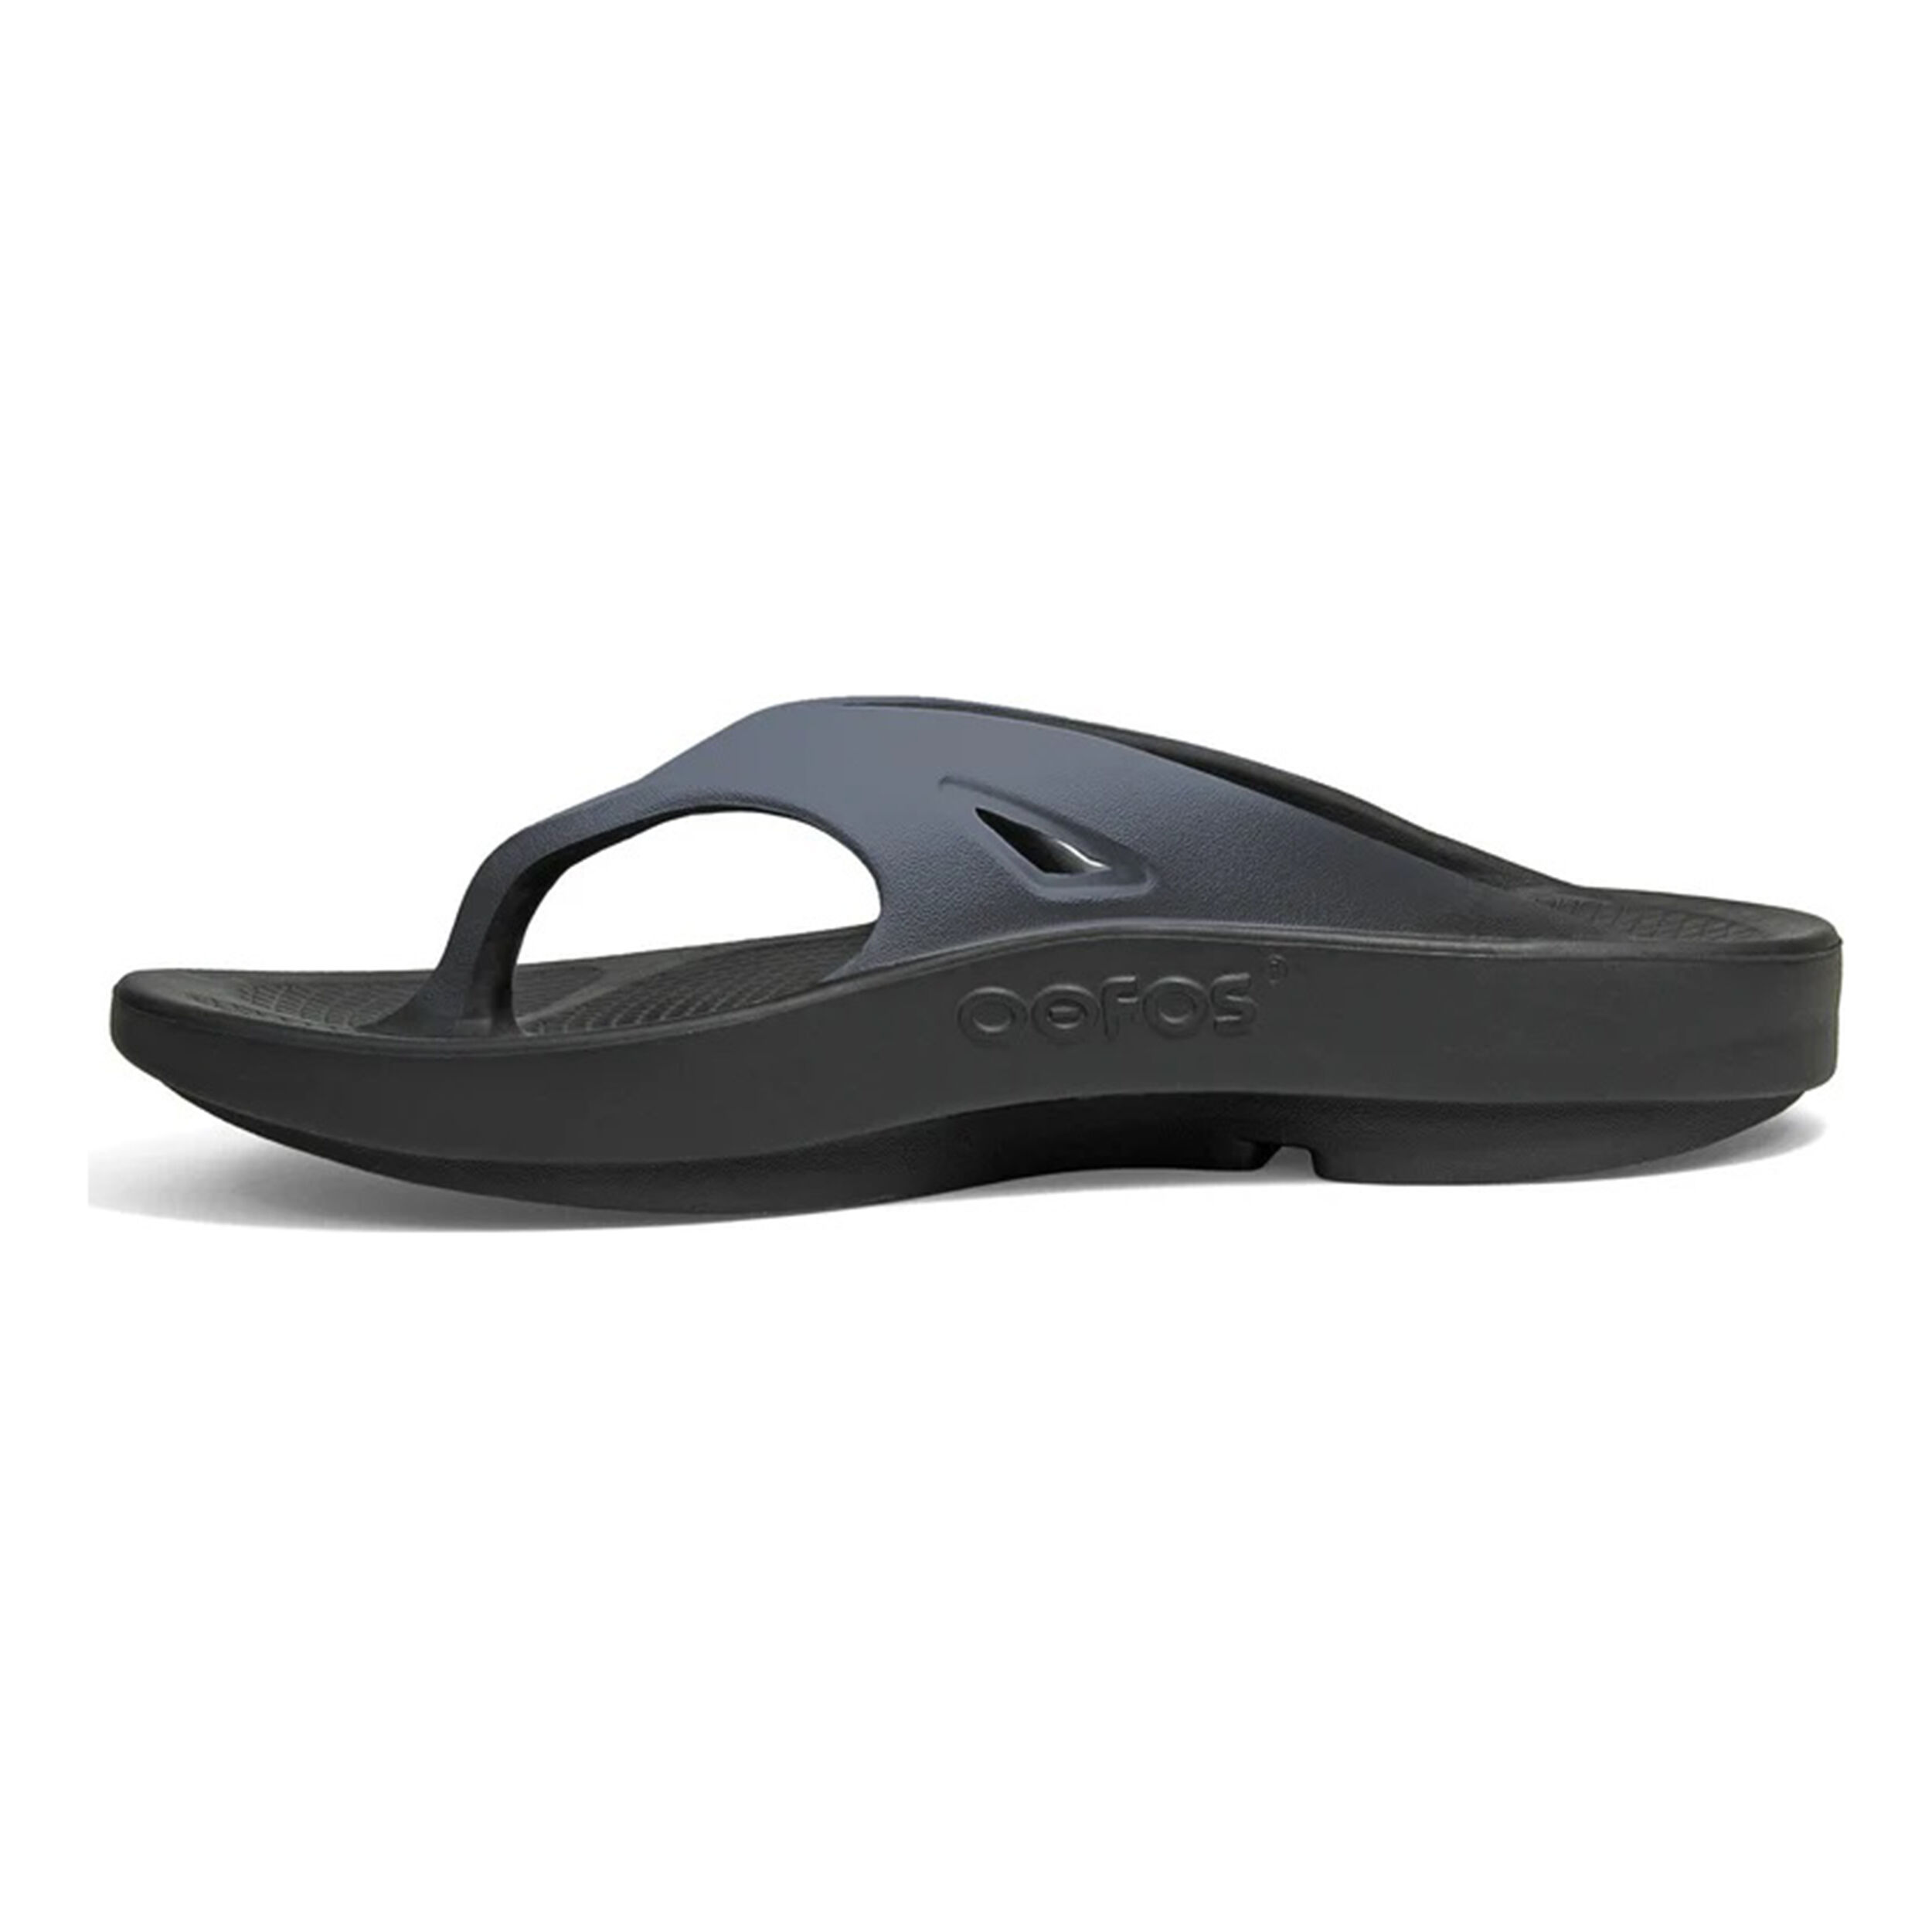 Buy OOFOS Ooriginal Sport Recovery Shoe Grey, Black online